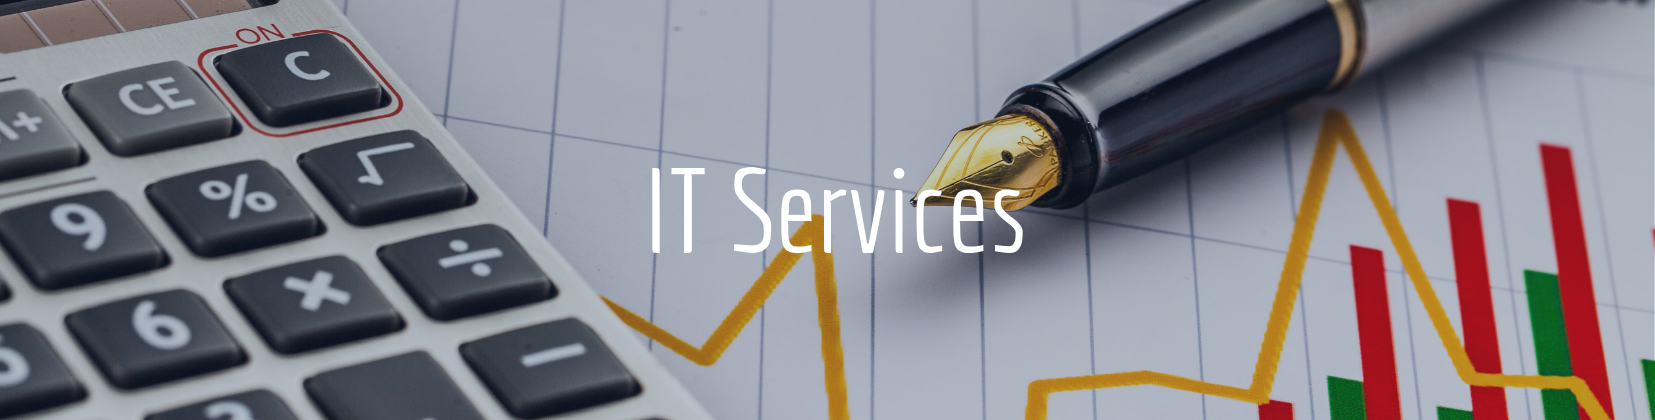 IT Services banner